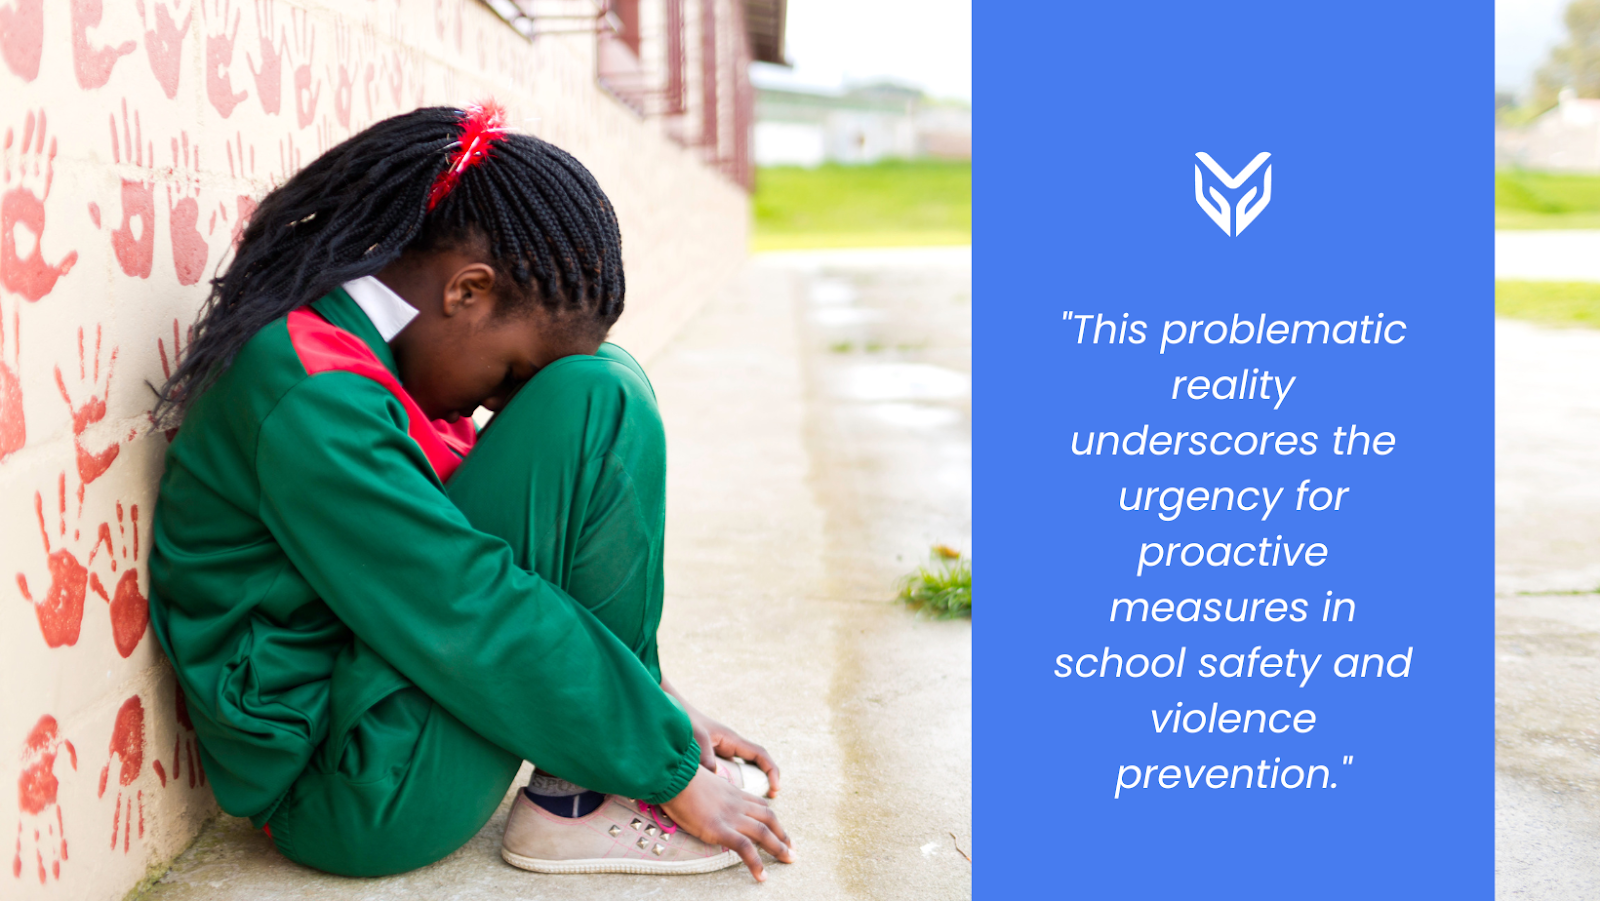 School Violence Prevention: The Role of Educators